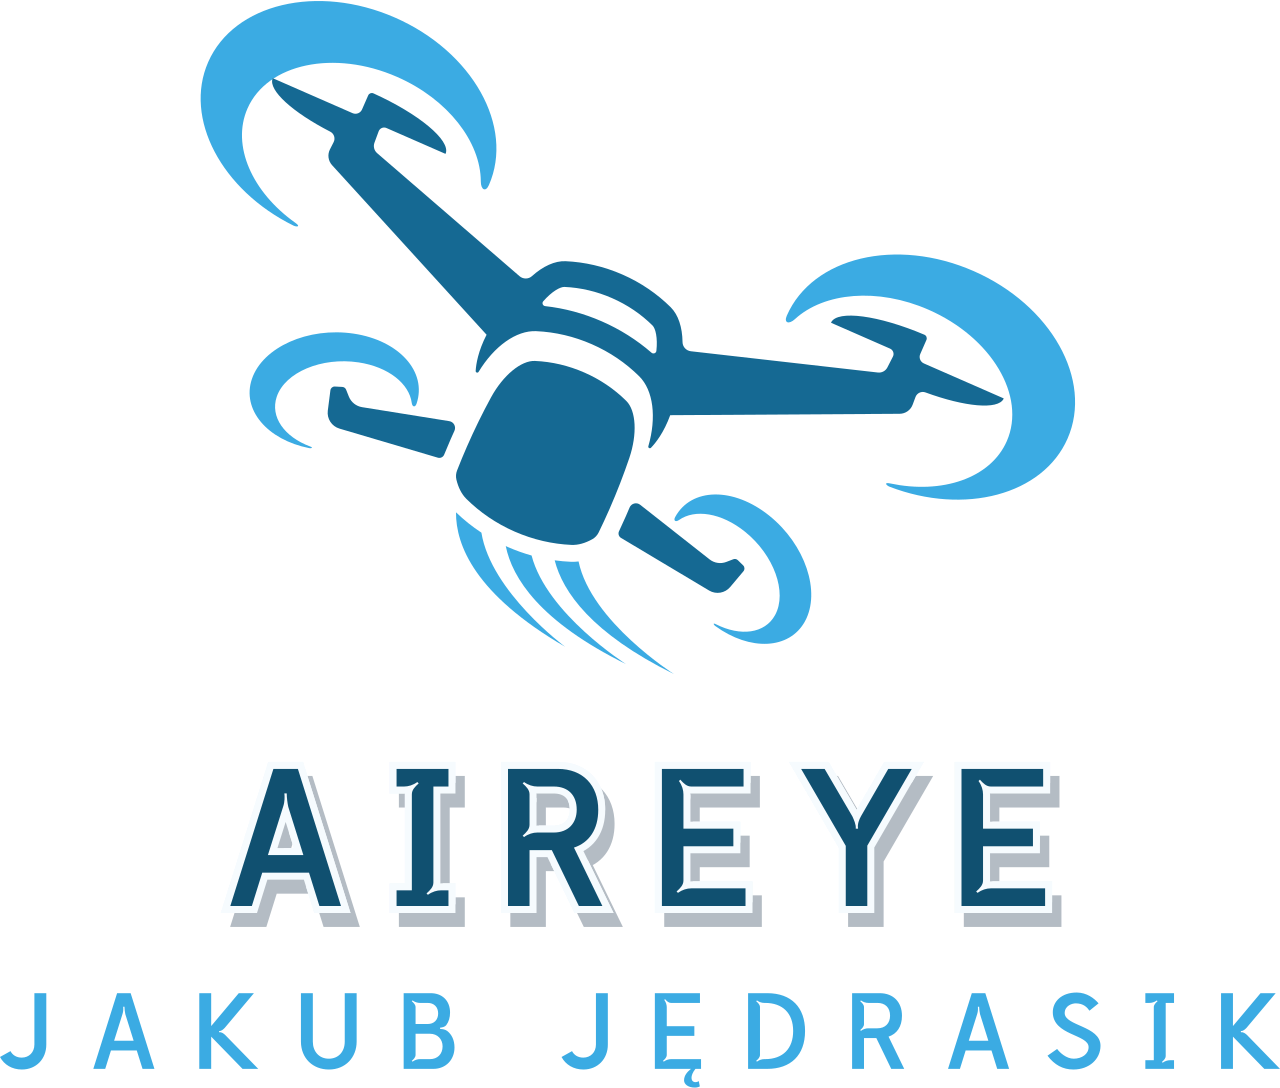 AirEye's logo